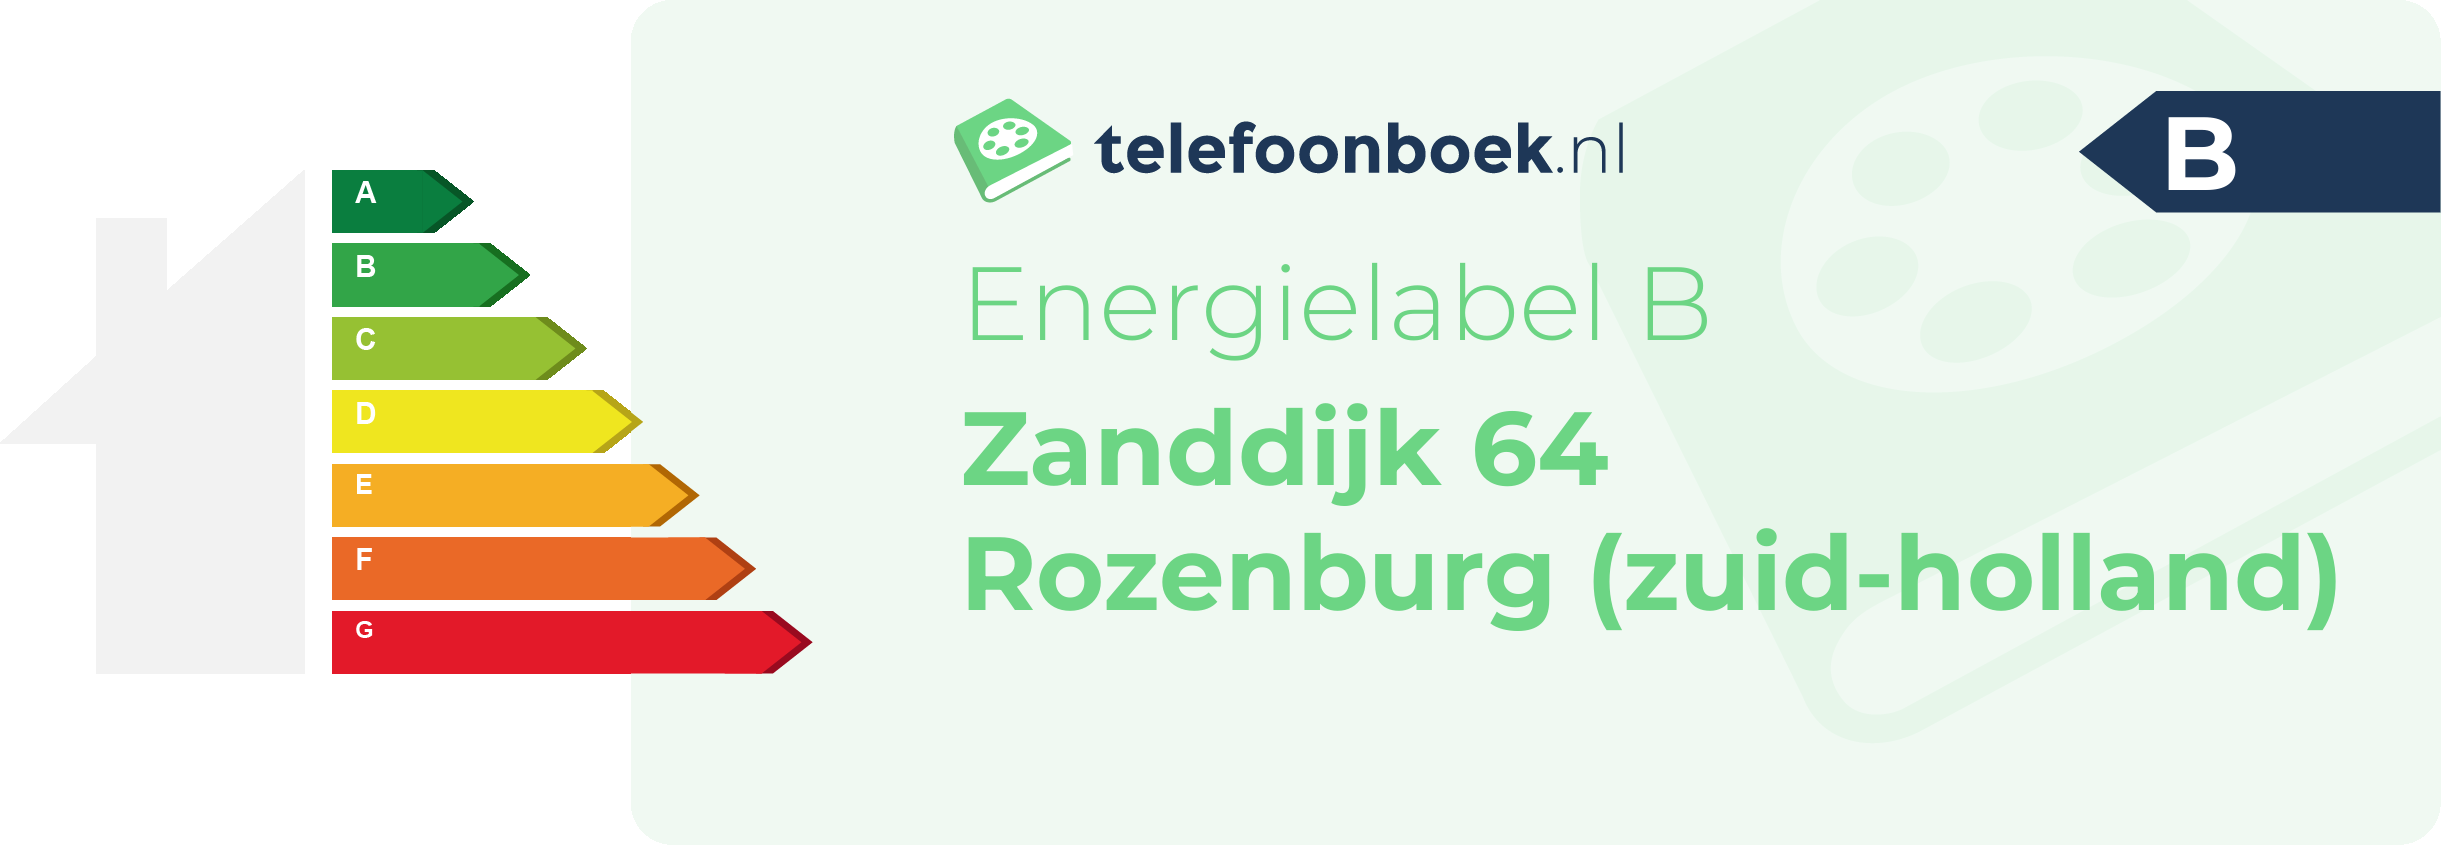 Energielabel Zanddijk 64 Rozenburg (Zuid-Holland)